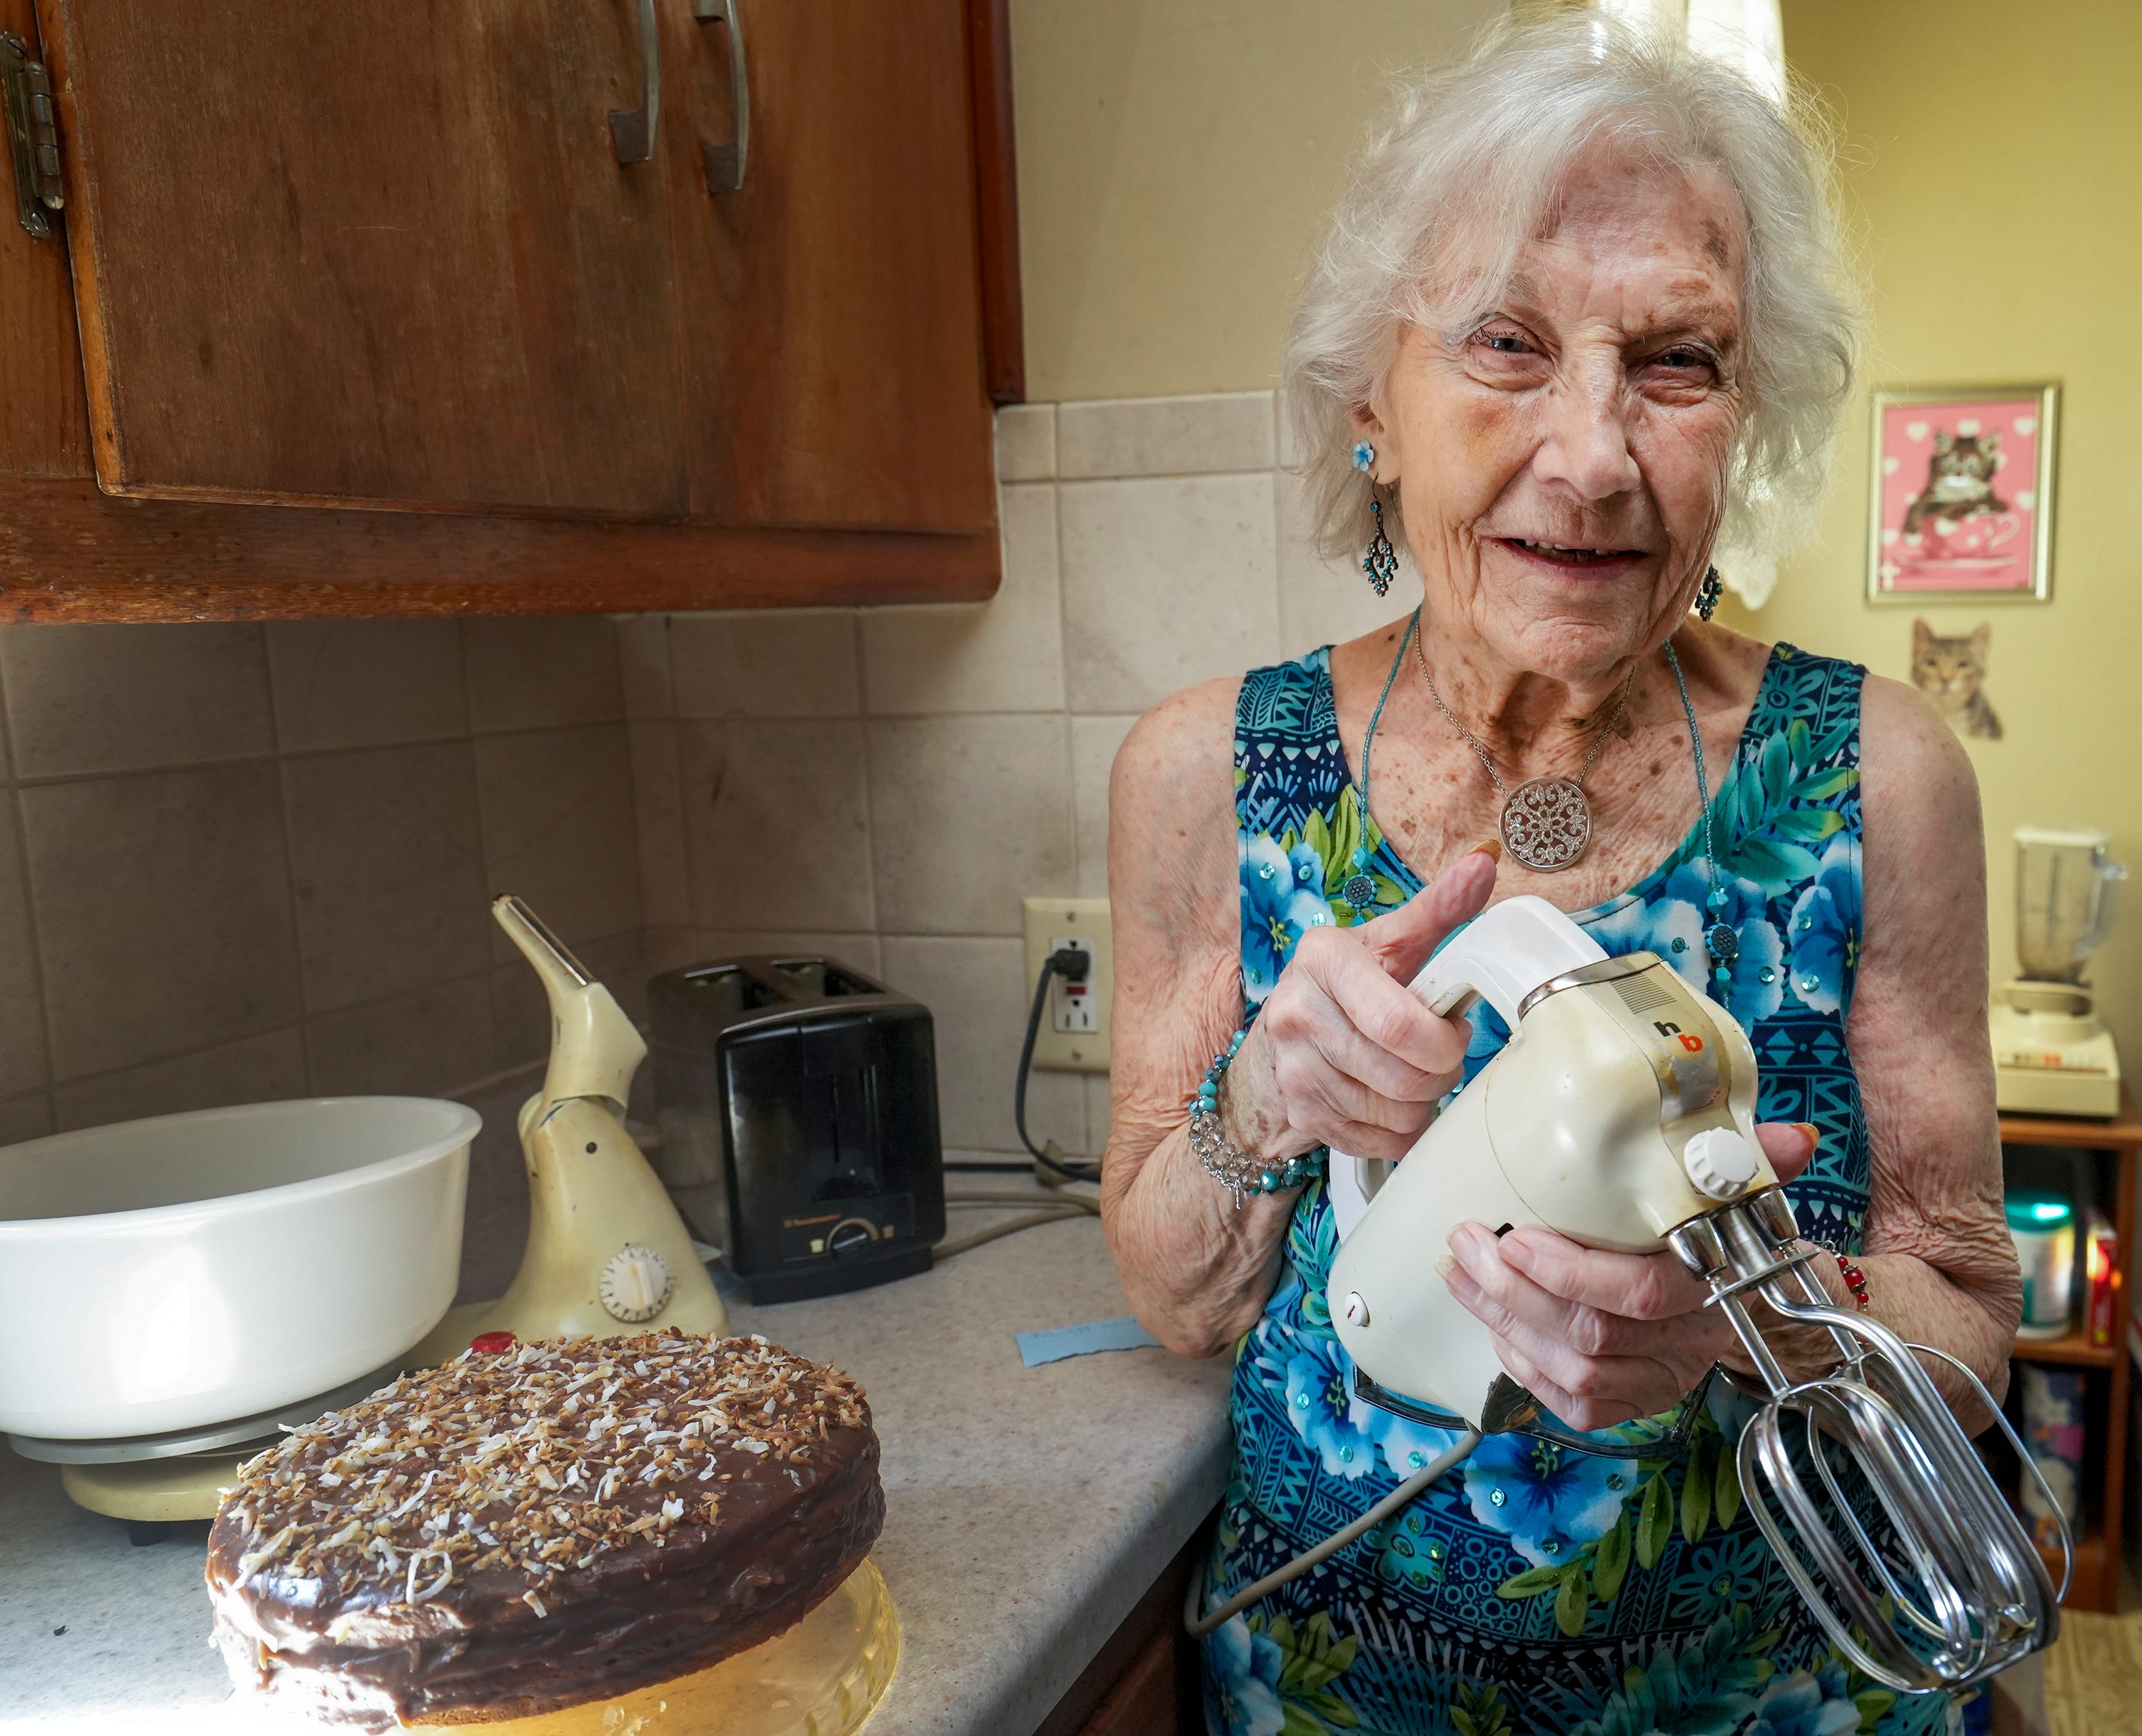 Pillsbury contest baker makes her cake recipe again, 70 years later